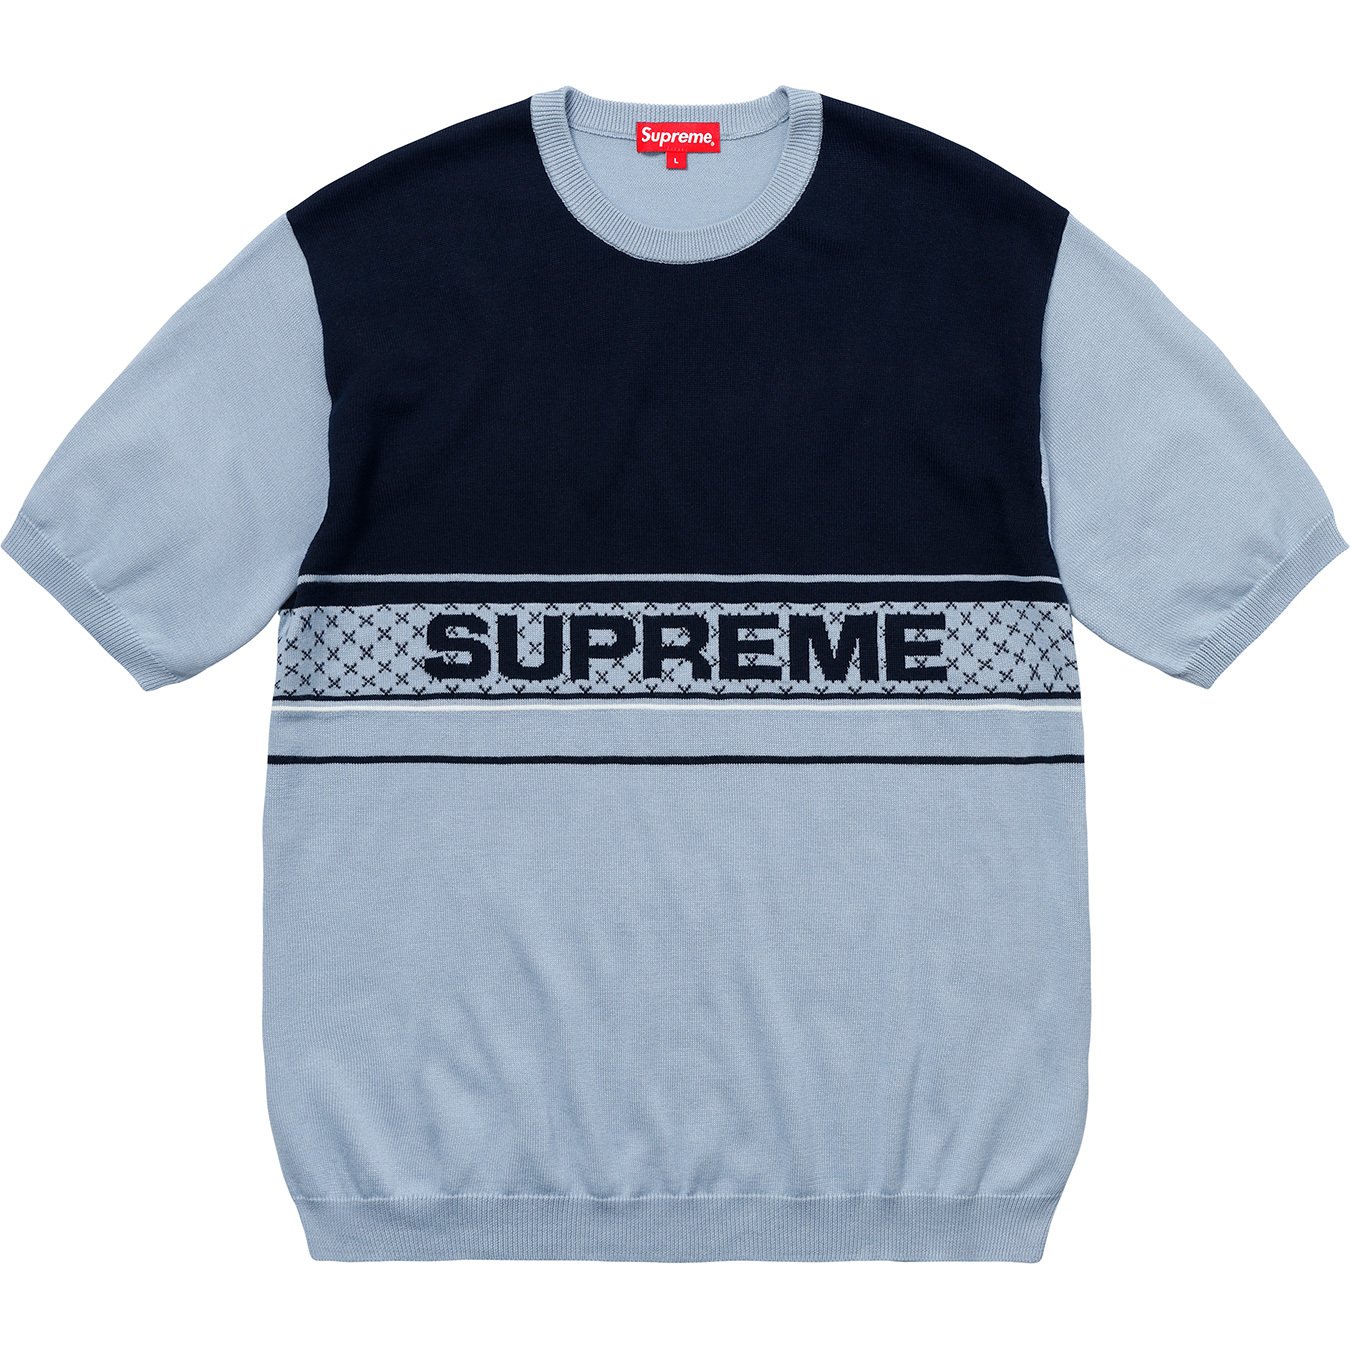 Supreme Chest Logo S/S Knit Top Light Blue